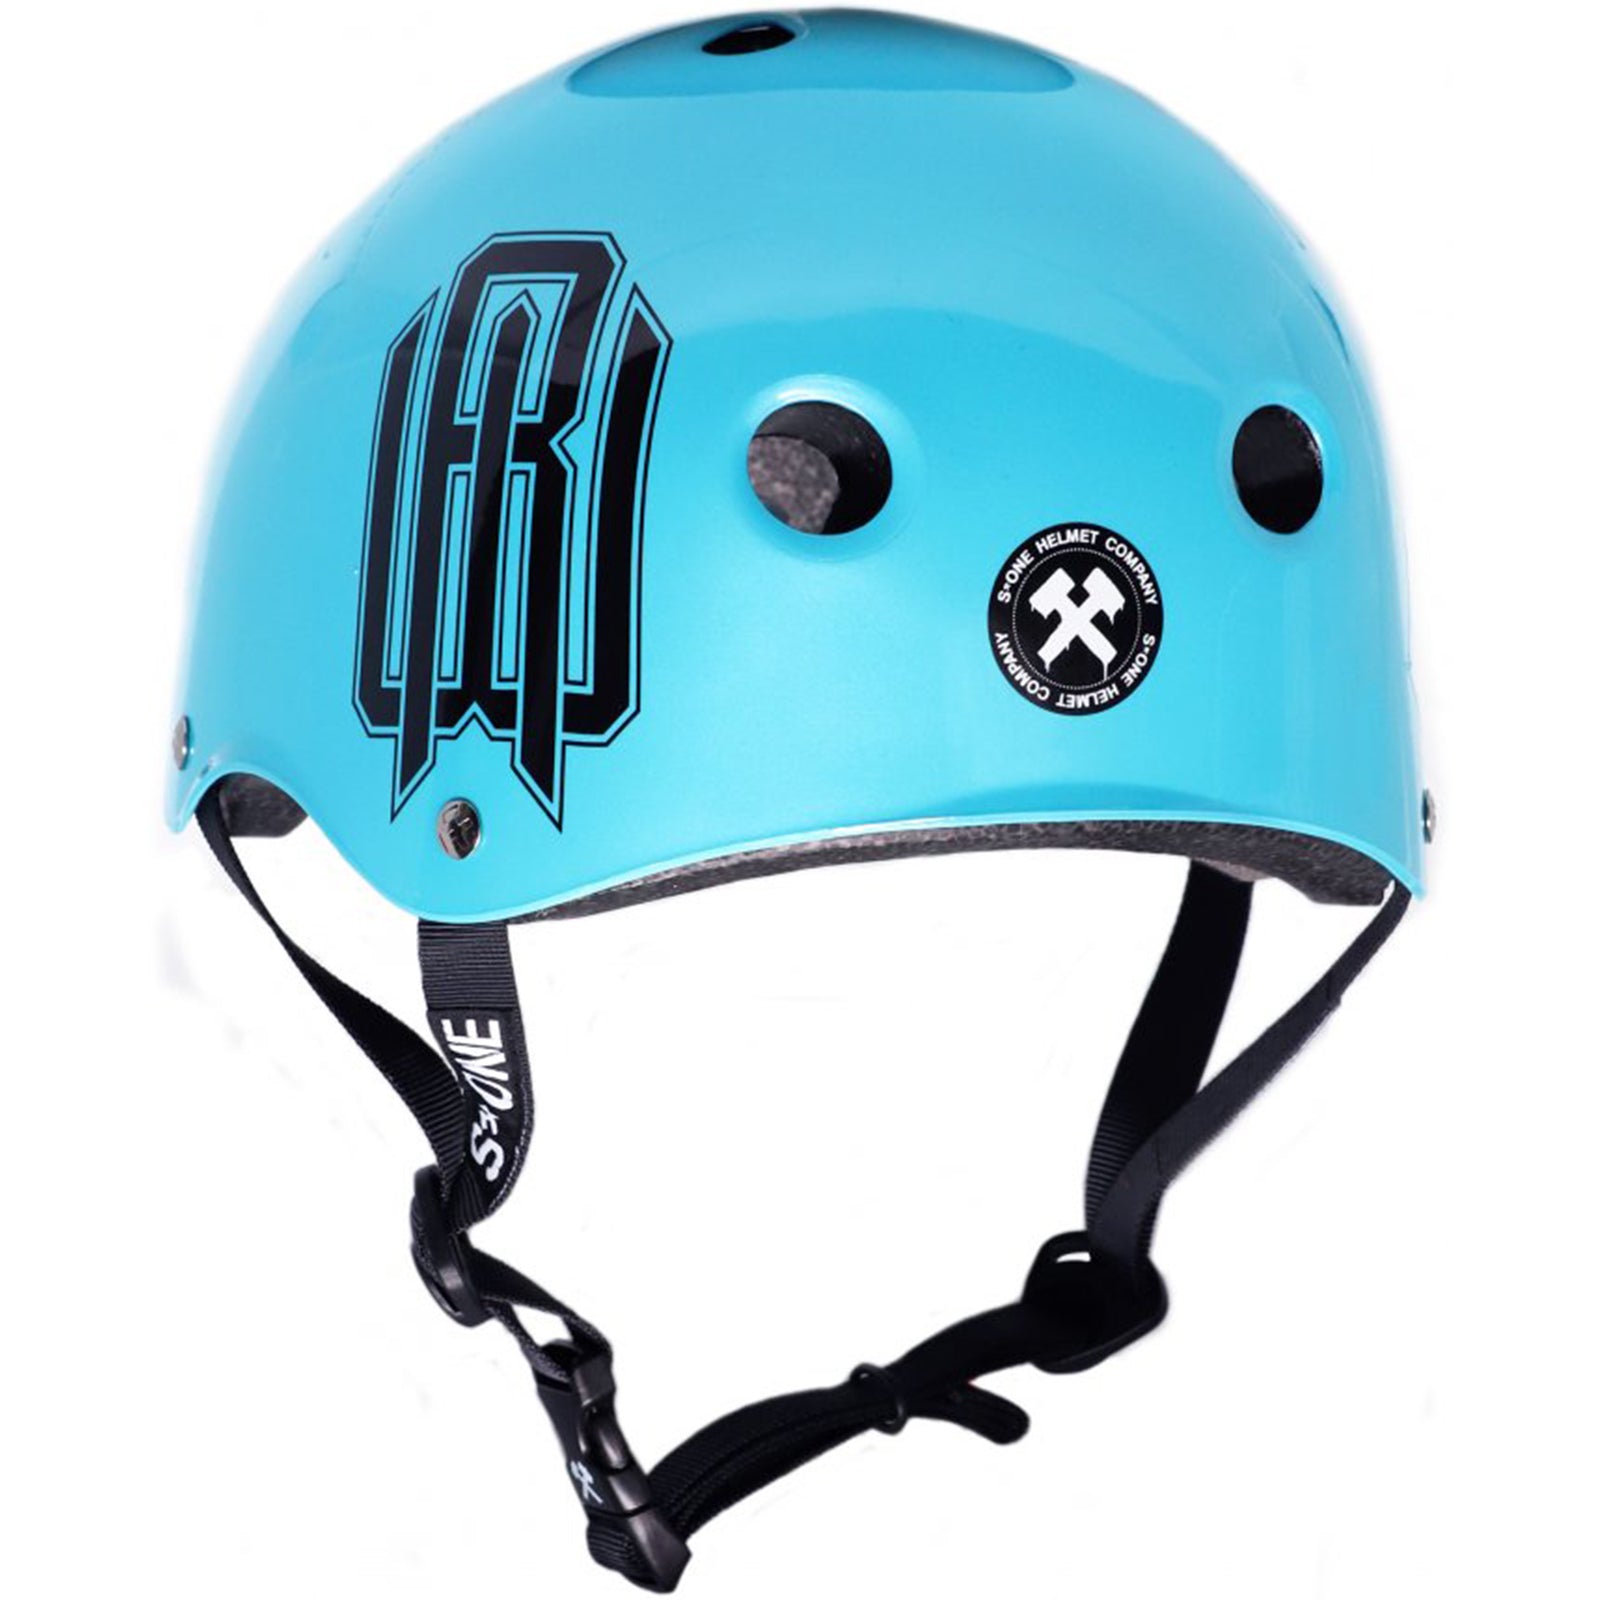 S1 Lifer Helmet - Raymond Warner Helmet